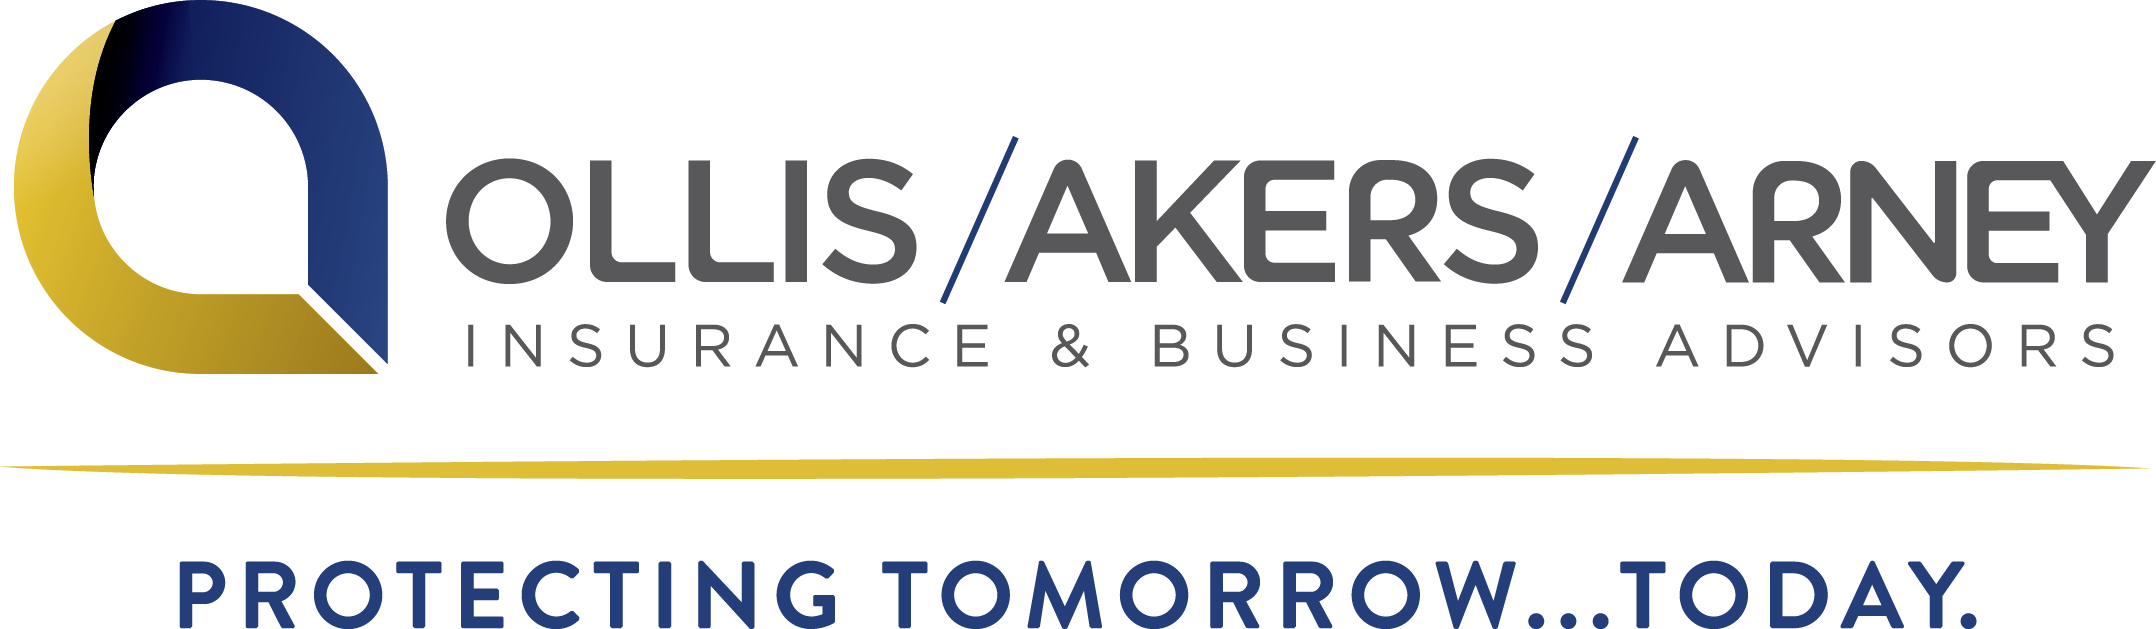 Ollis Akers Arney Insurance logo